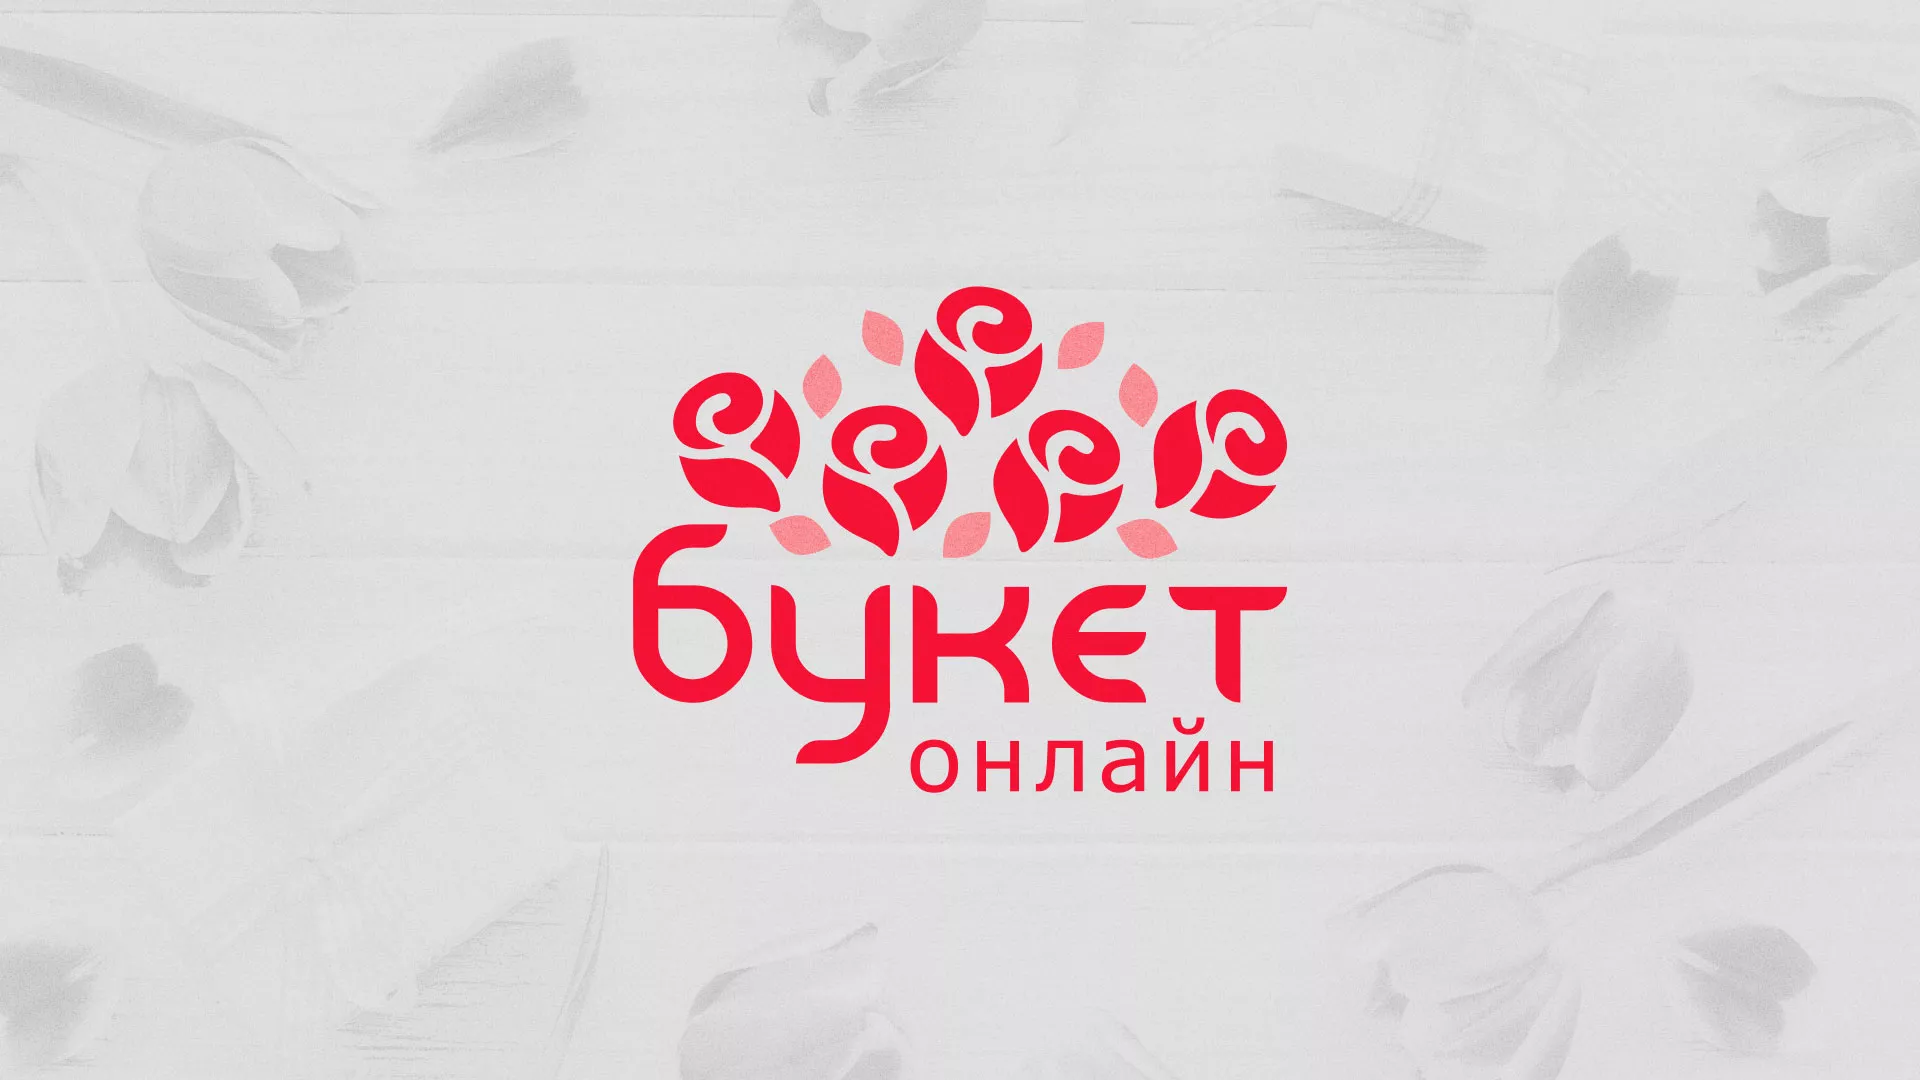 Создание интернет-магазина «Букет-онлайн» по цветам в Саратове